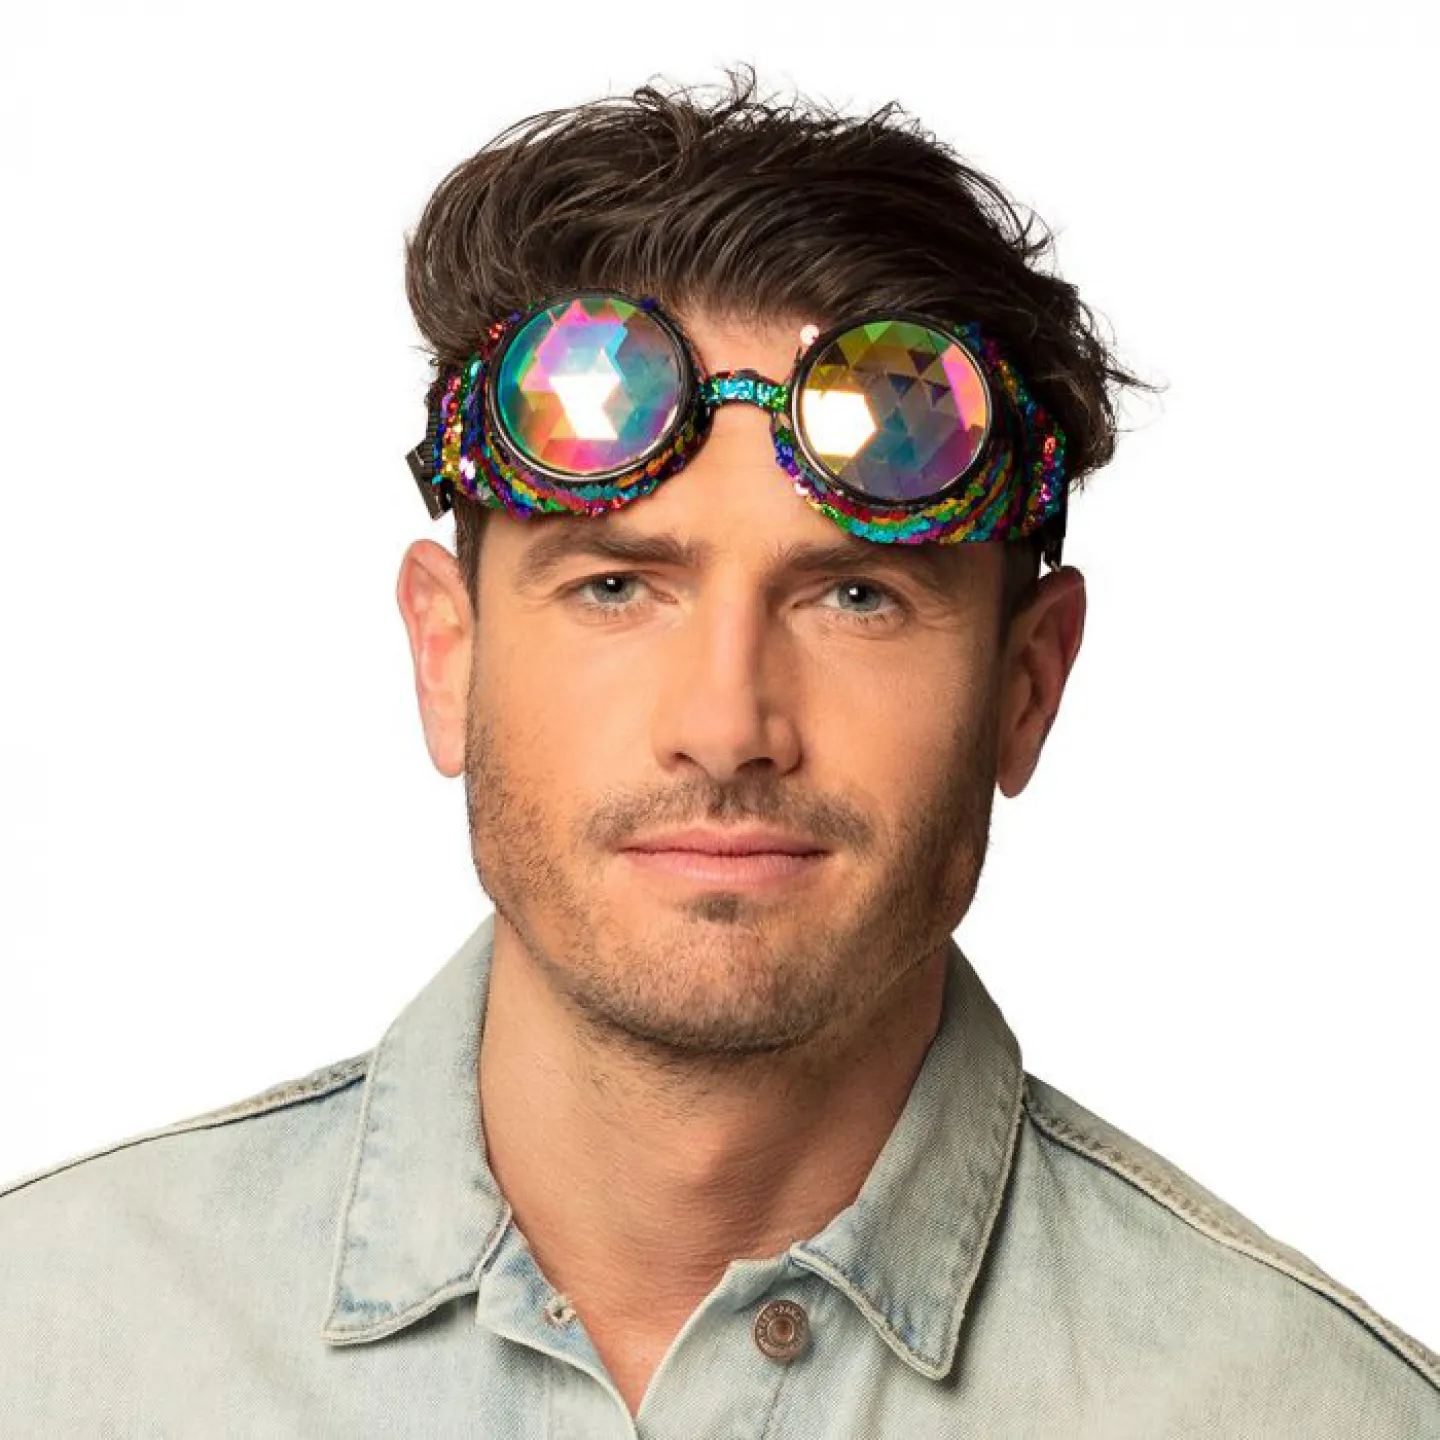 Online Partybril mirage regenboog kopen.